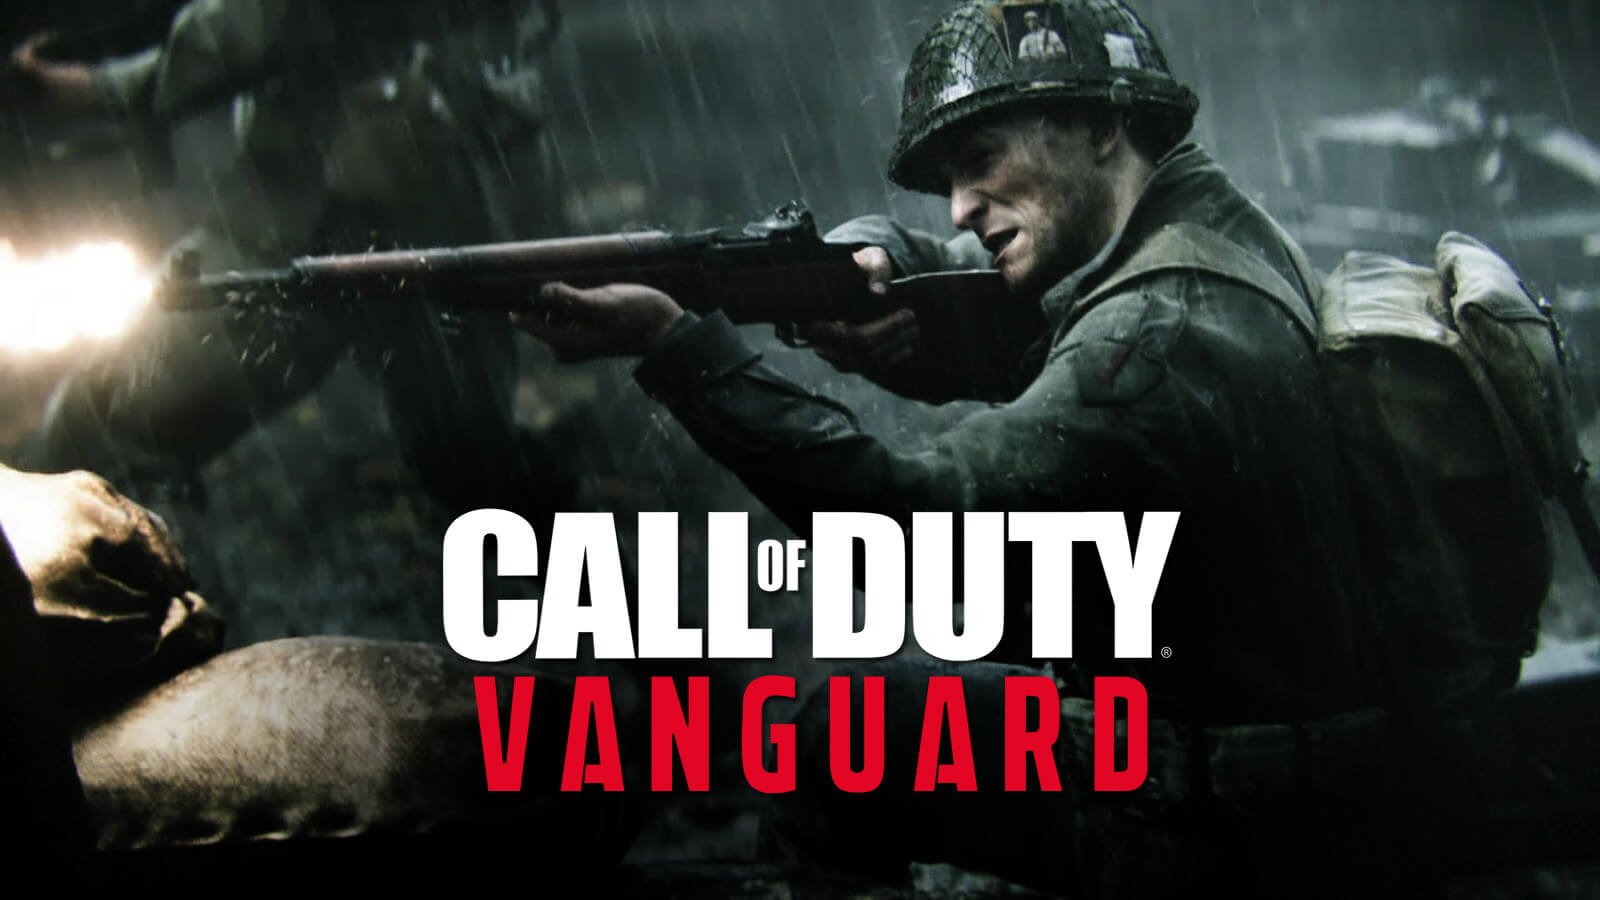 Call Of Duty Vanguard Image Leaked Ahead Reveal